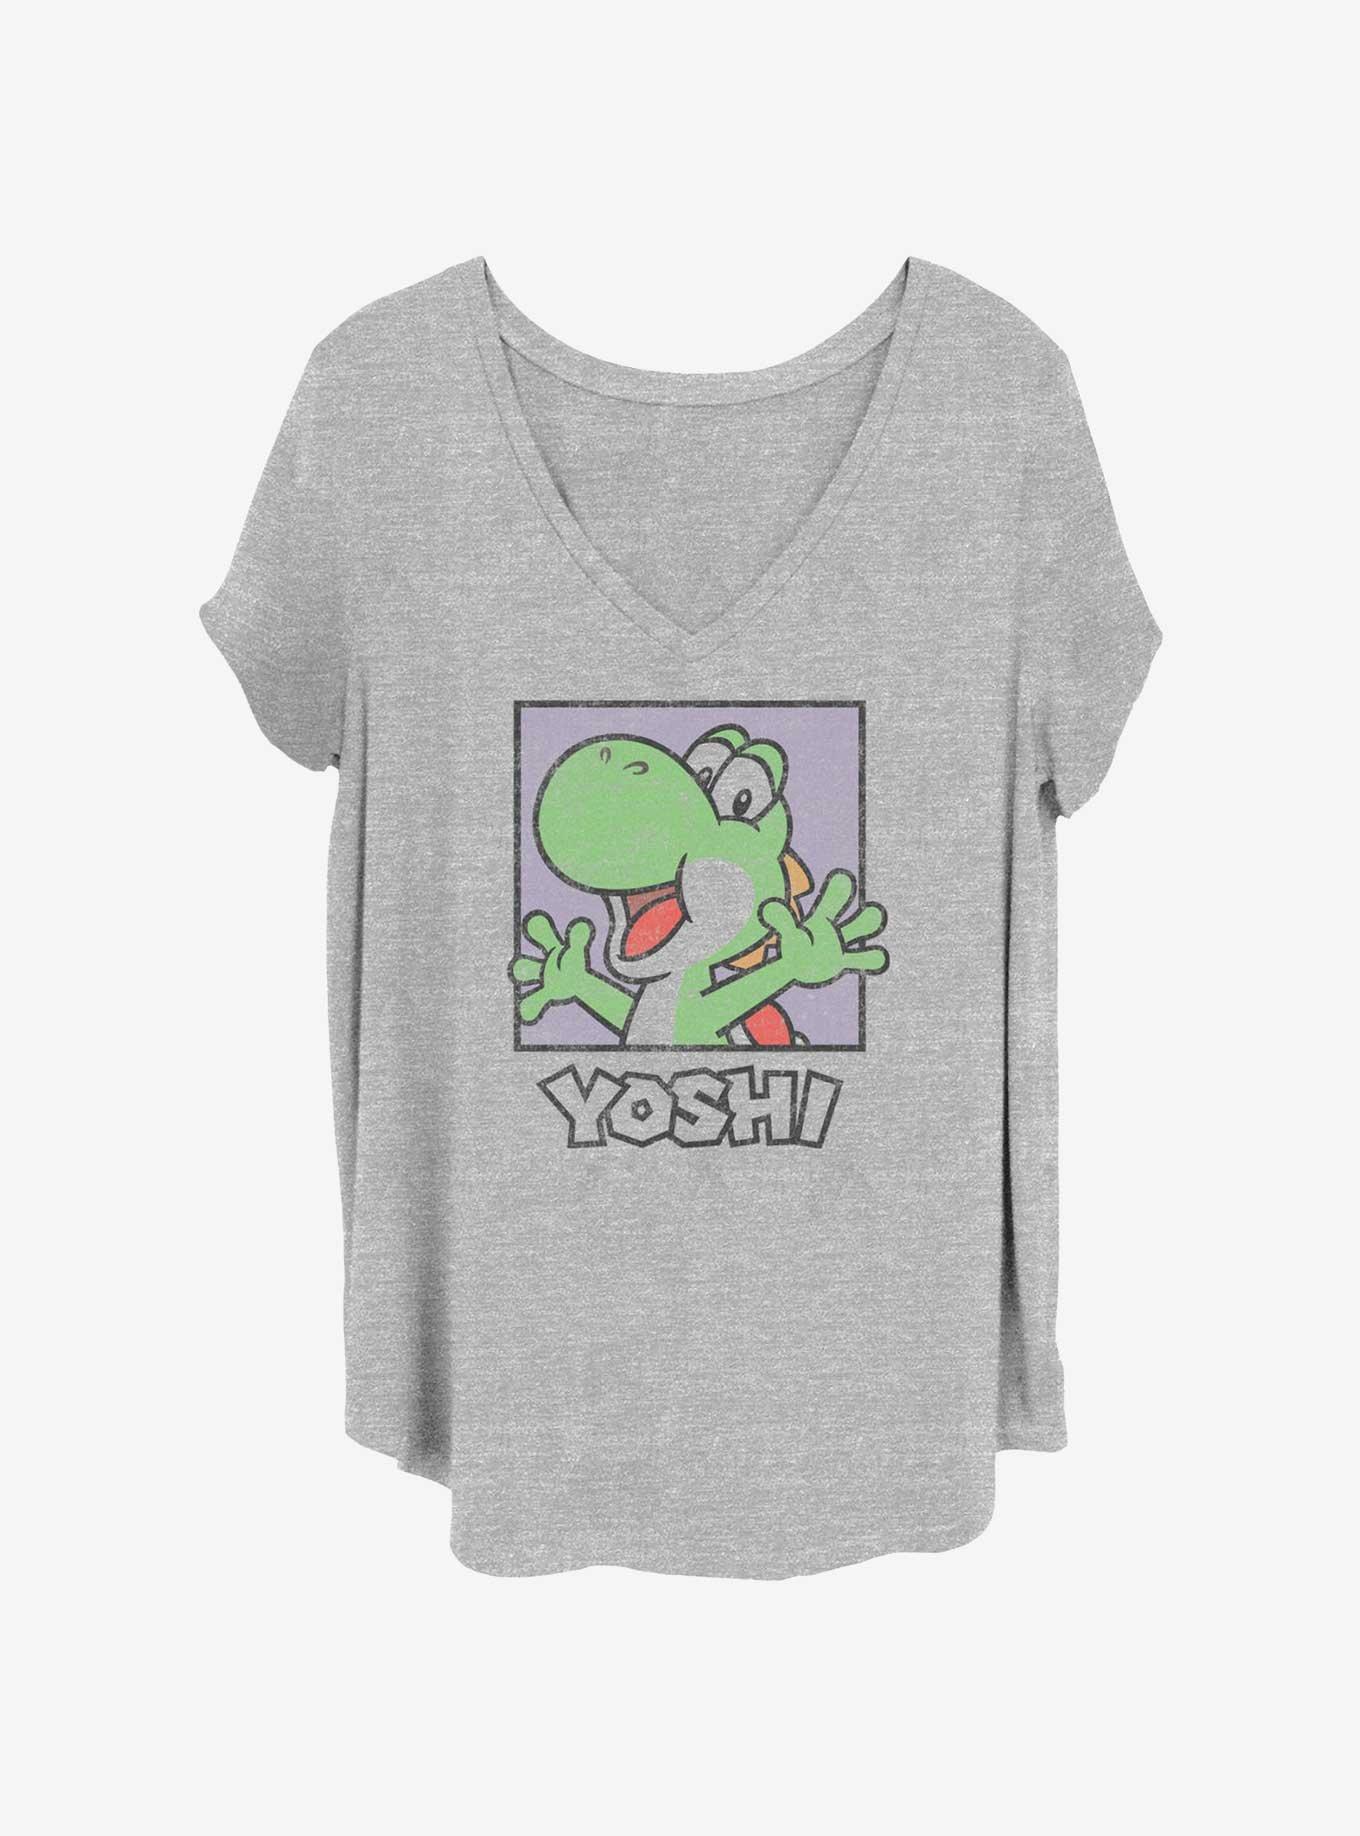 Nintendo Happy Yoshi Square Girls T-Shirt Plus